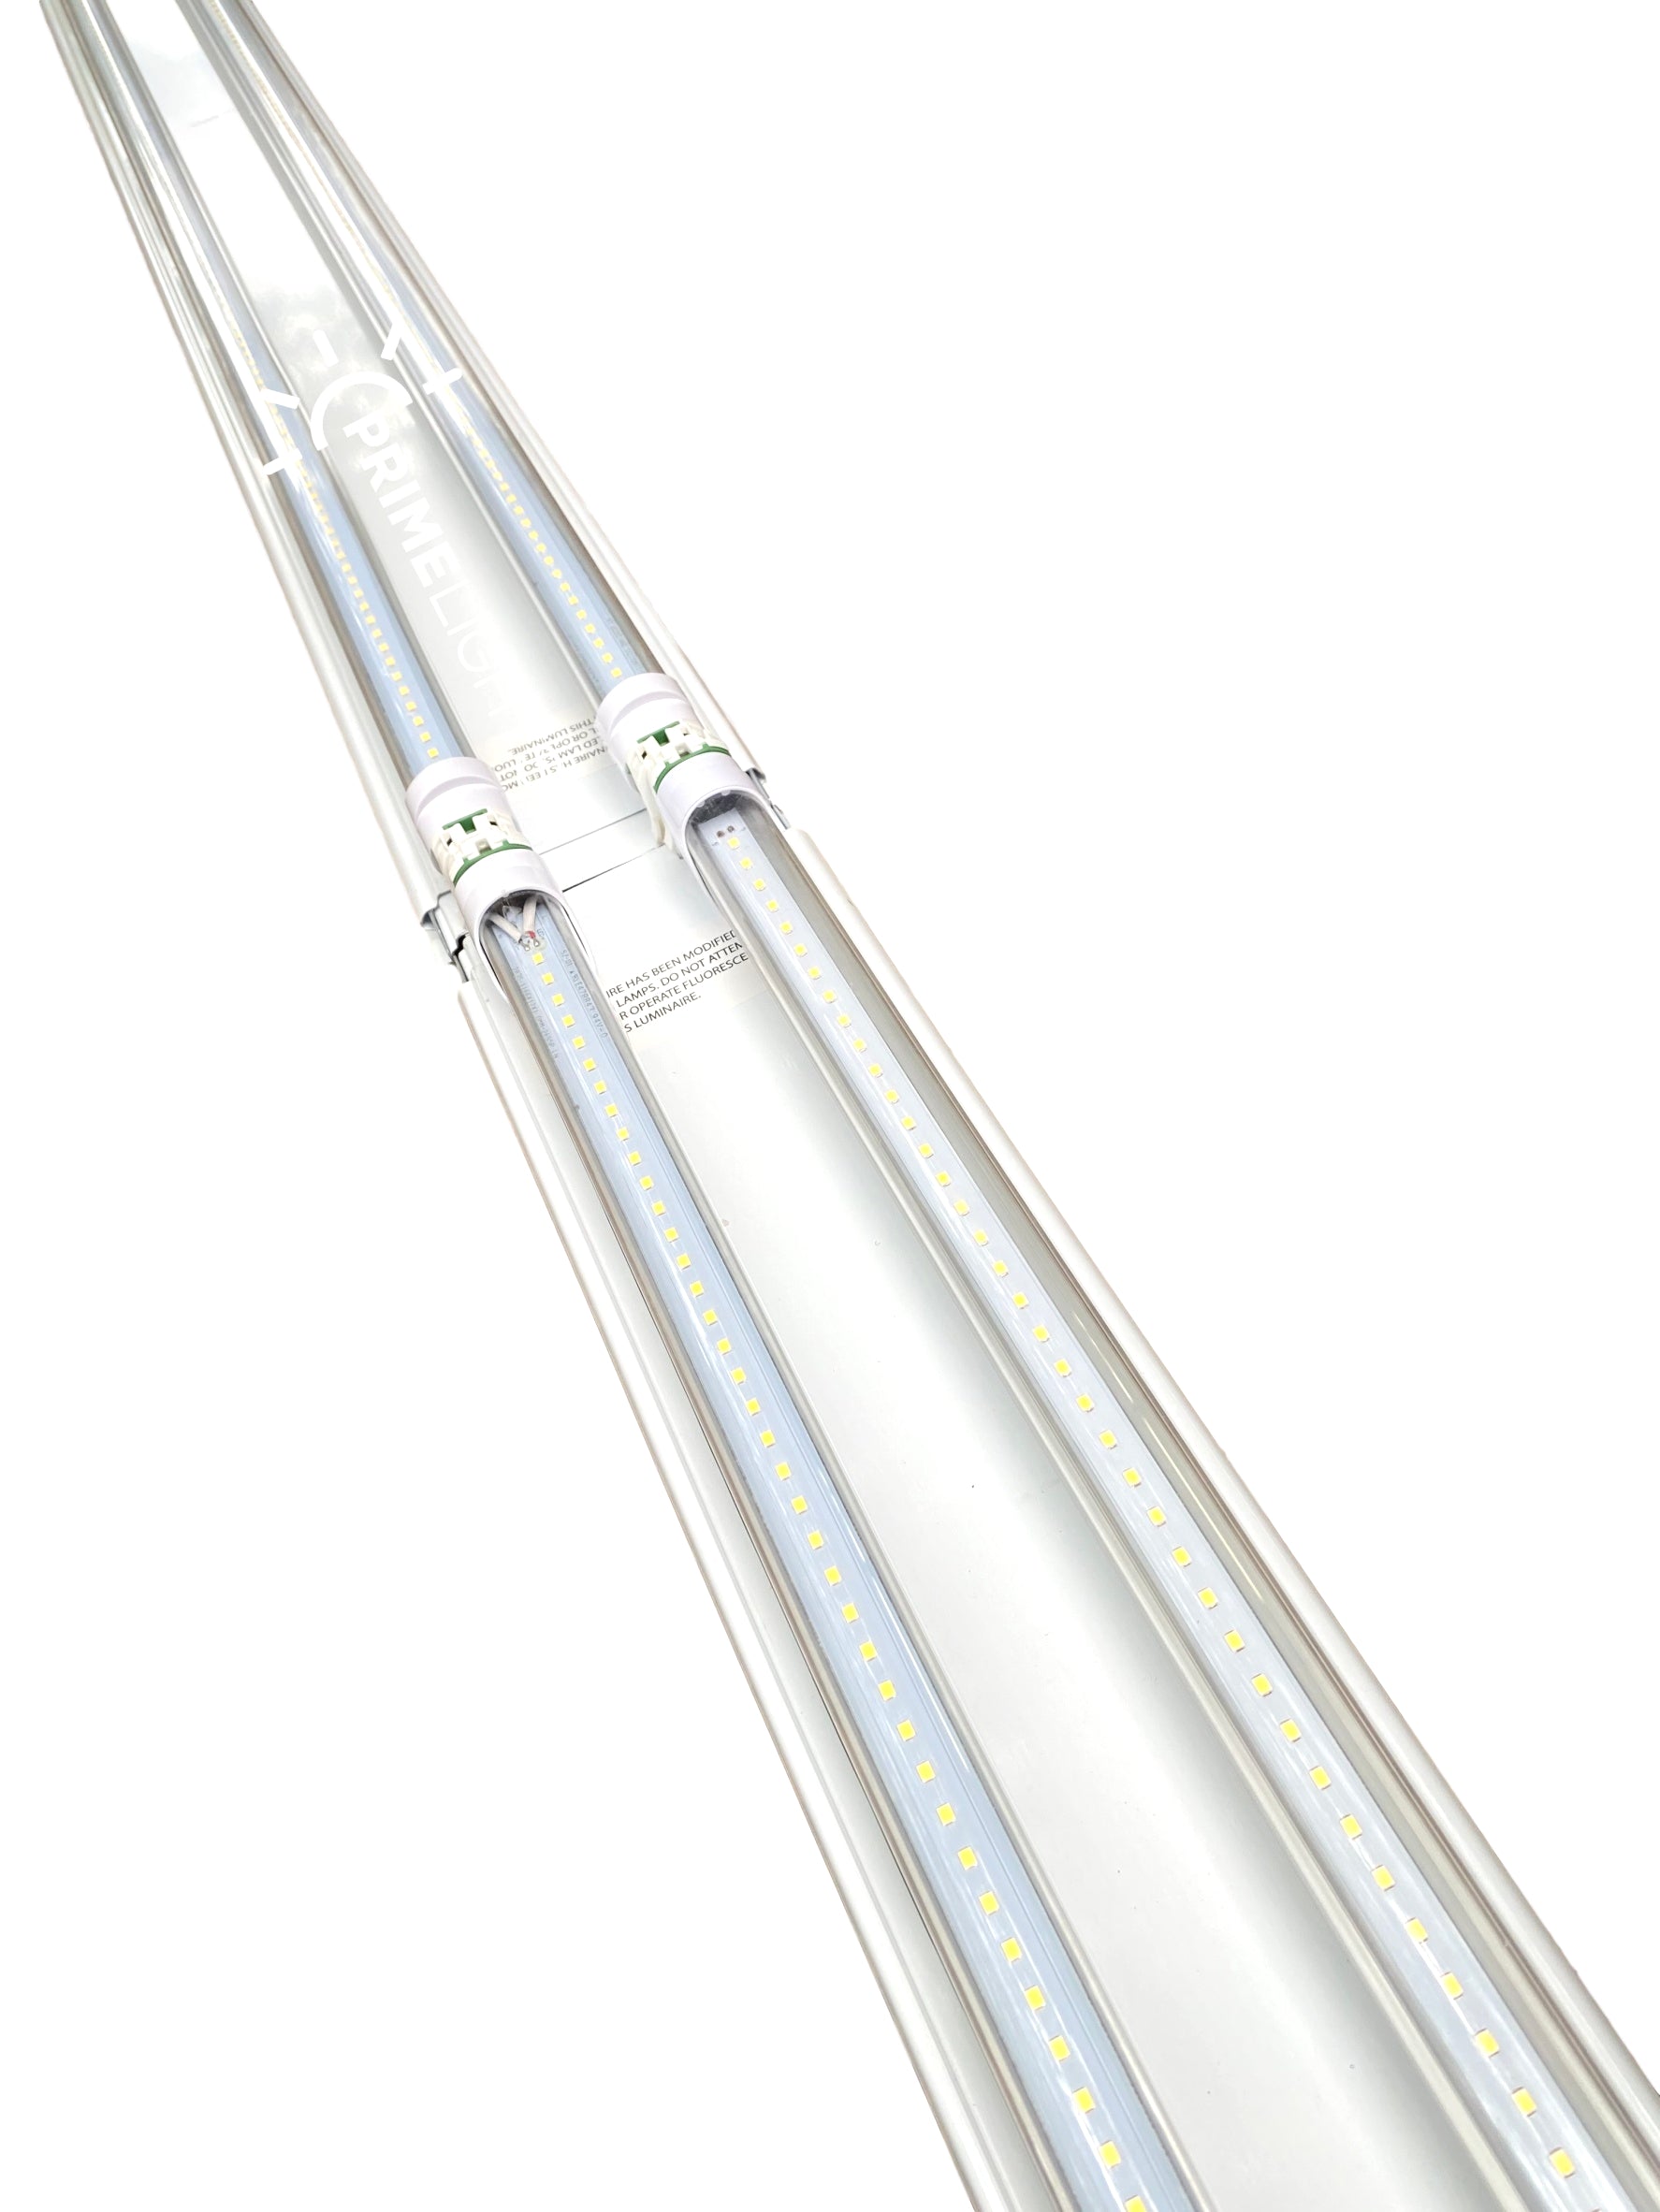 The BOLT 8' – 4 Lamp LED Shop Light – 12,400 Lumens CLEAR